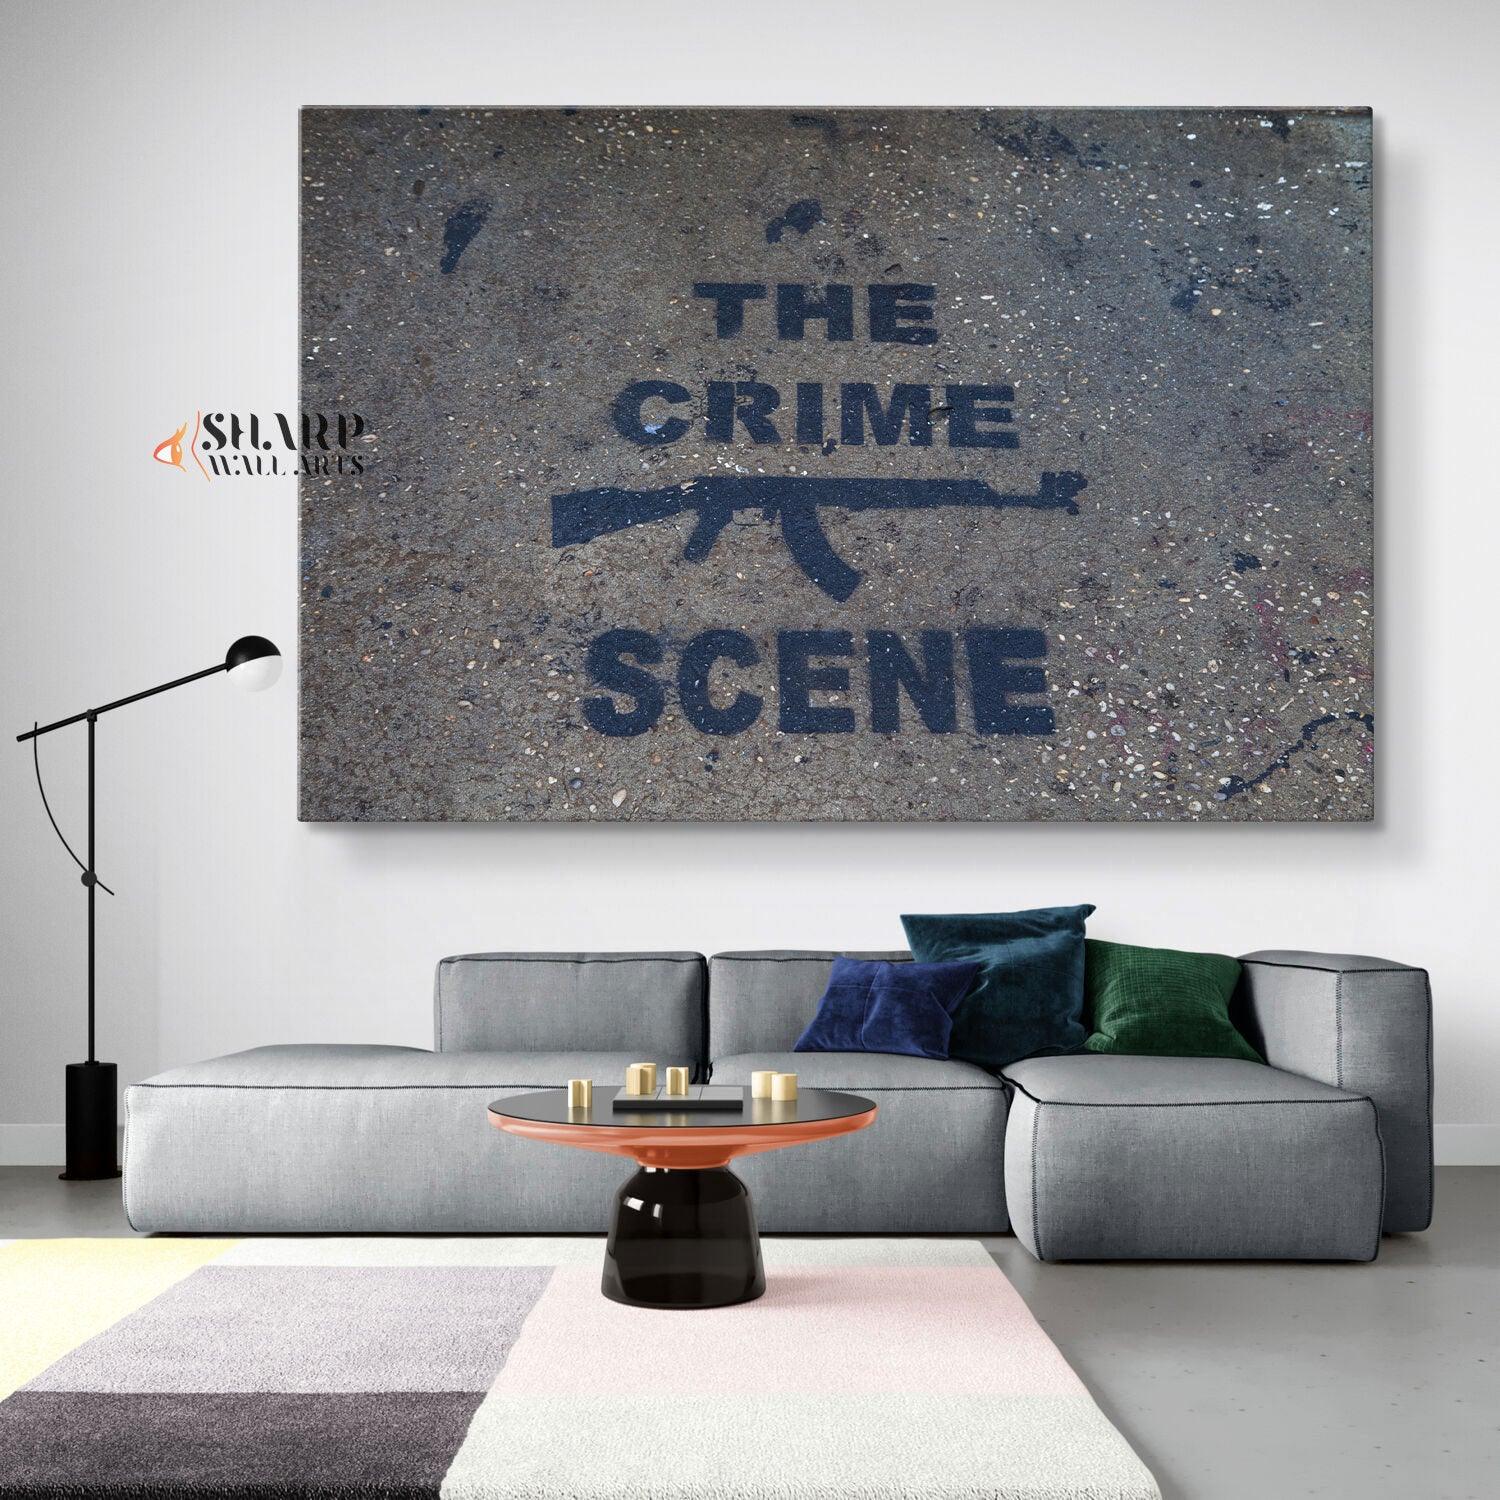 Banksy Wall Art - The Crime Scene - SharpWallArts